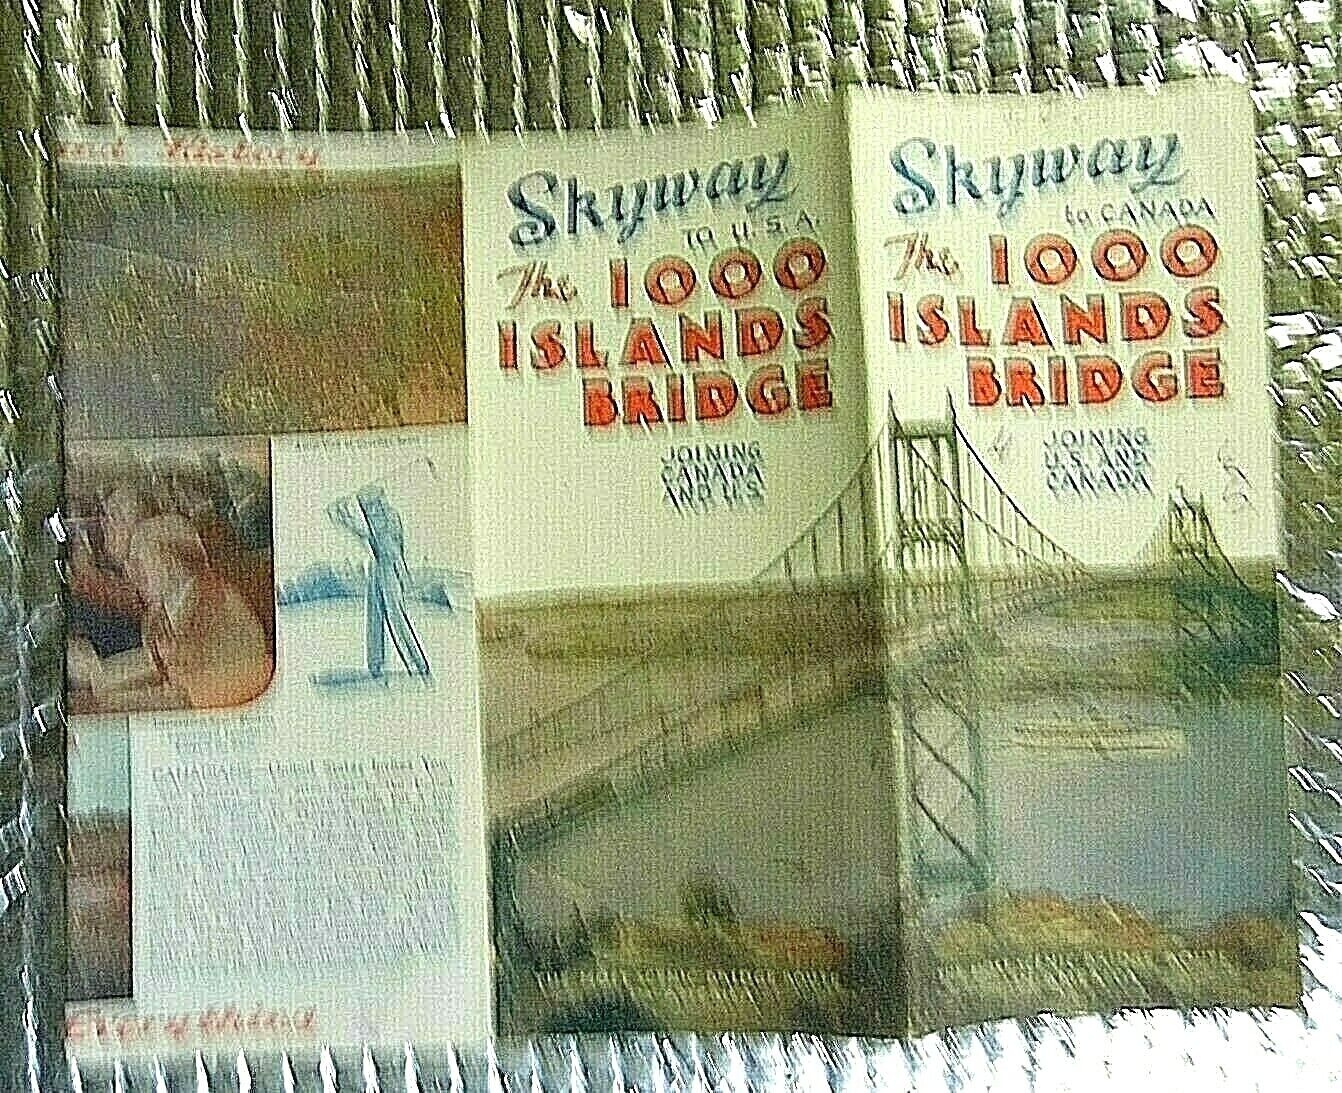 Late 30\'s Travel Brochure Skyway To USA 1000 Island Bridge Joining Canada Bridge